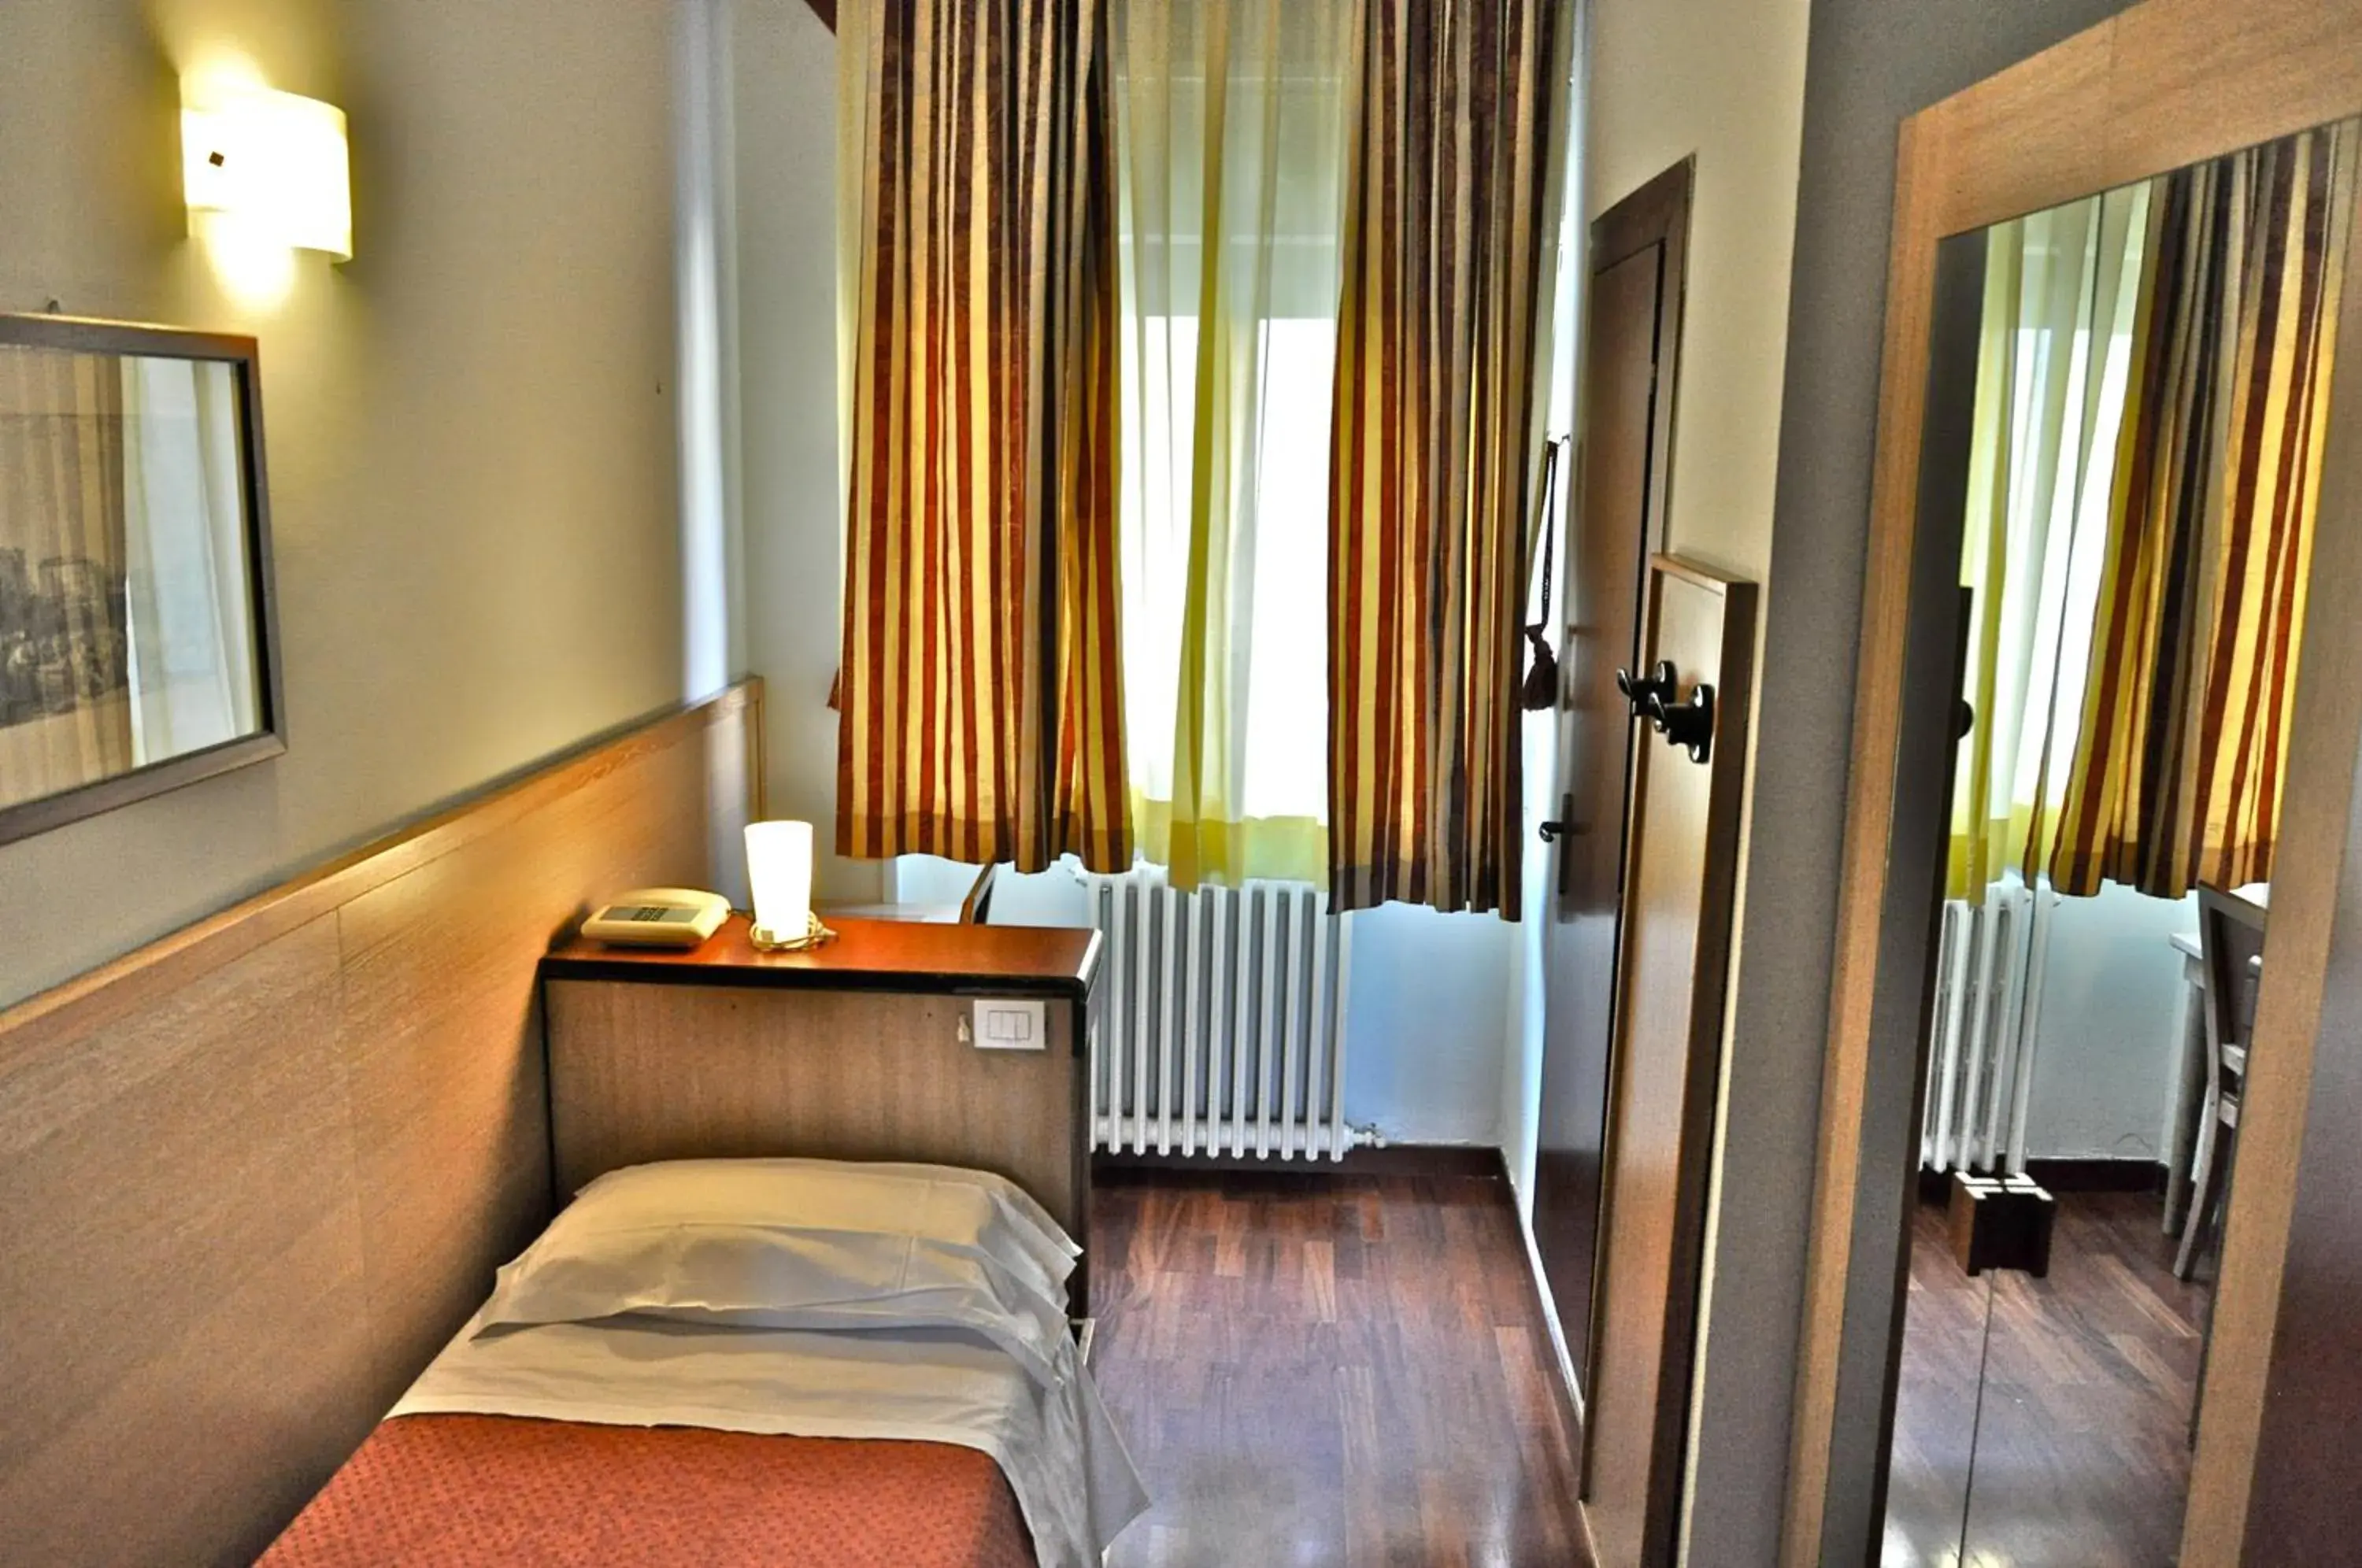 Bed, Room Photo in Hotel Dover